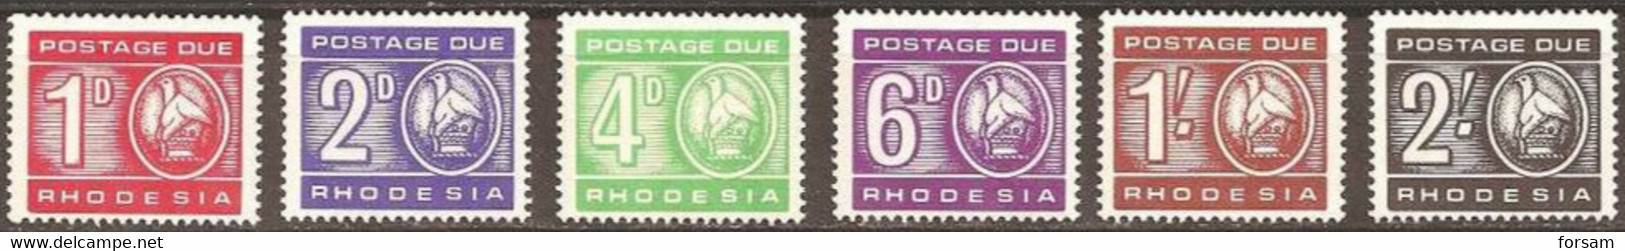 RHODESIA..1967..Michel # 5-10...MLH...Portomarken...MiCV - 18 Euro. - Rhodesia (1964-1980)